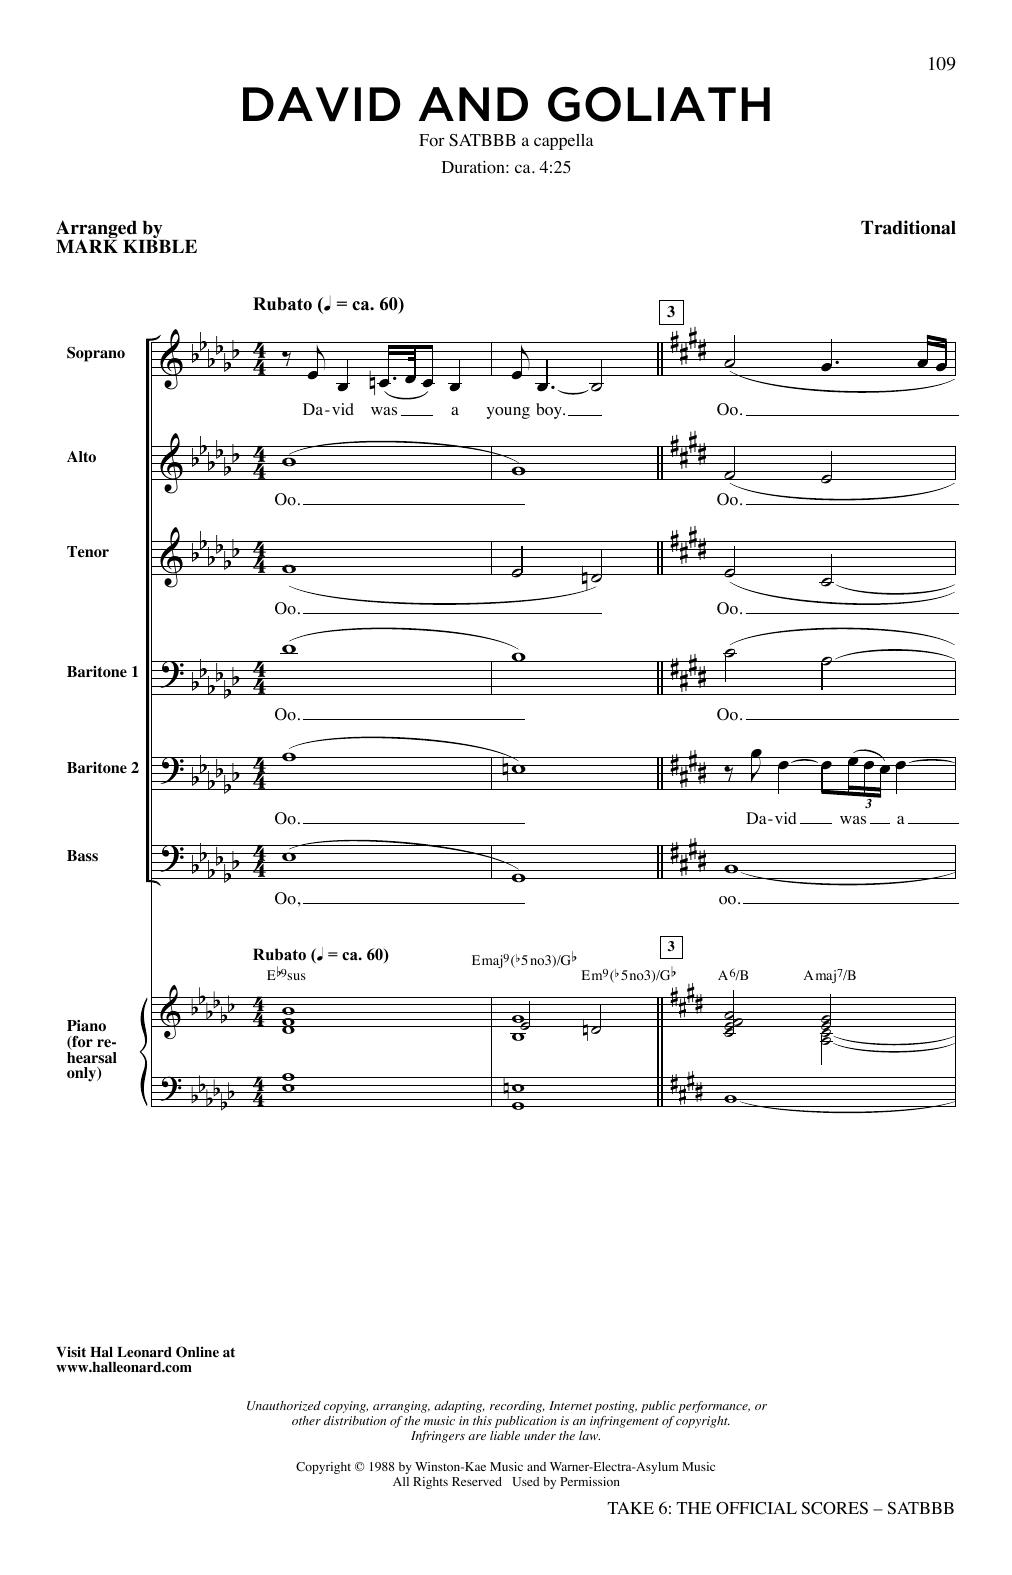 Take 6 David And Goliath Sheet Music Notes & Chords for SATB Choir - Download or Print PDF